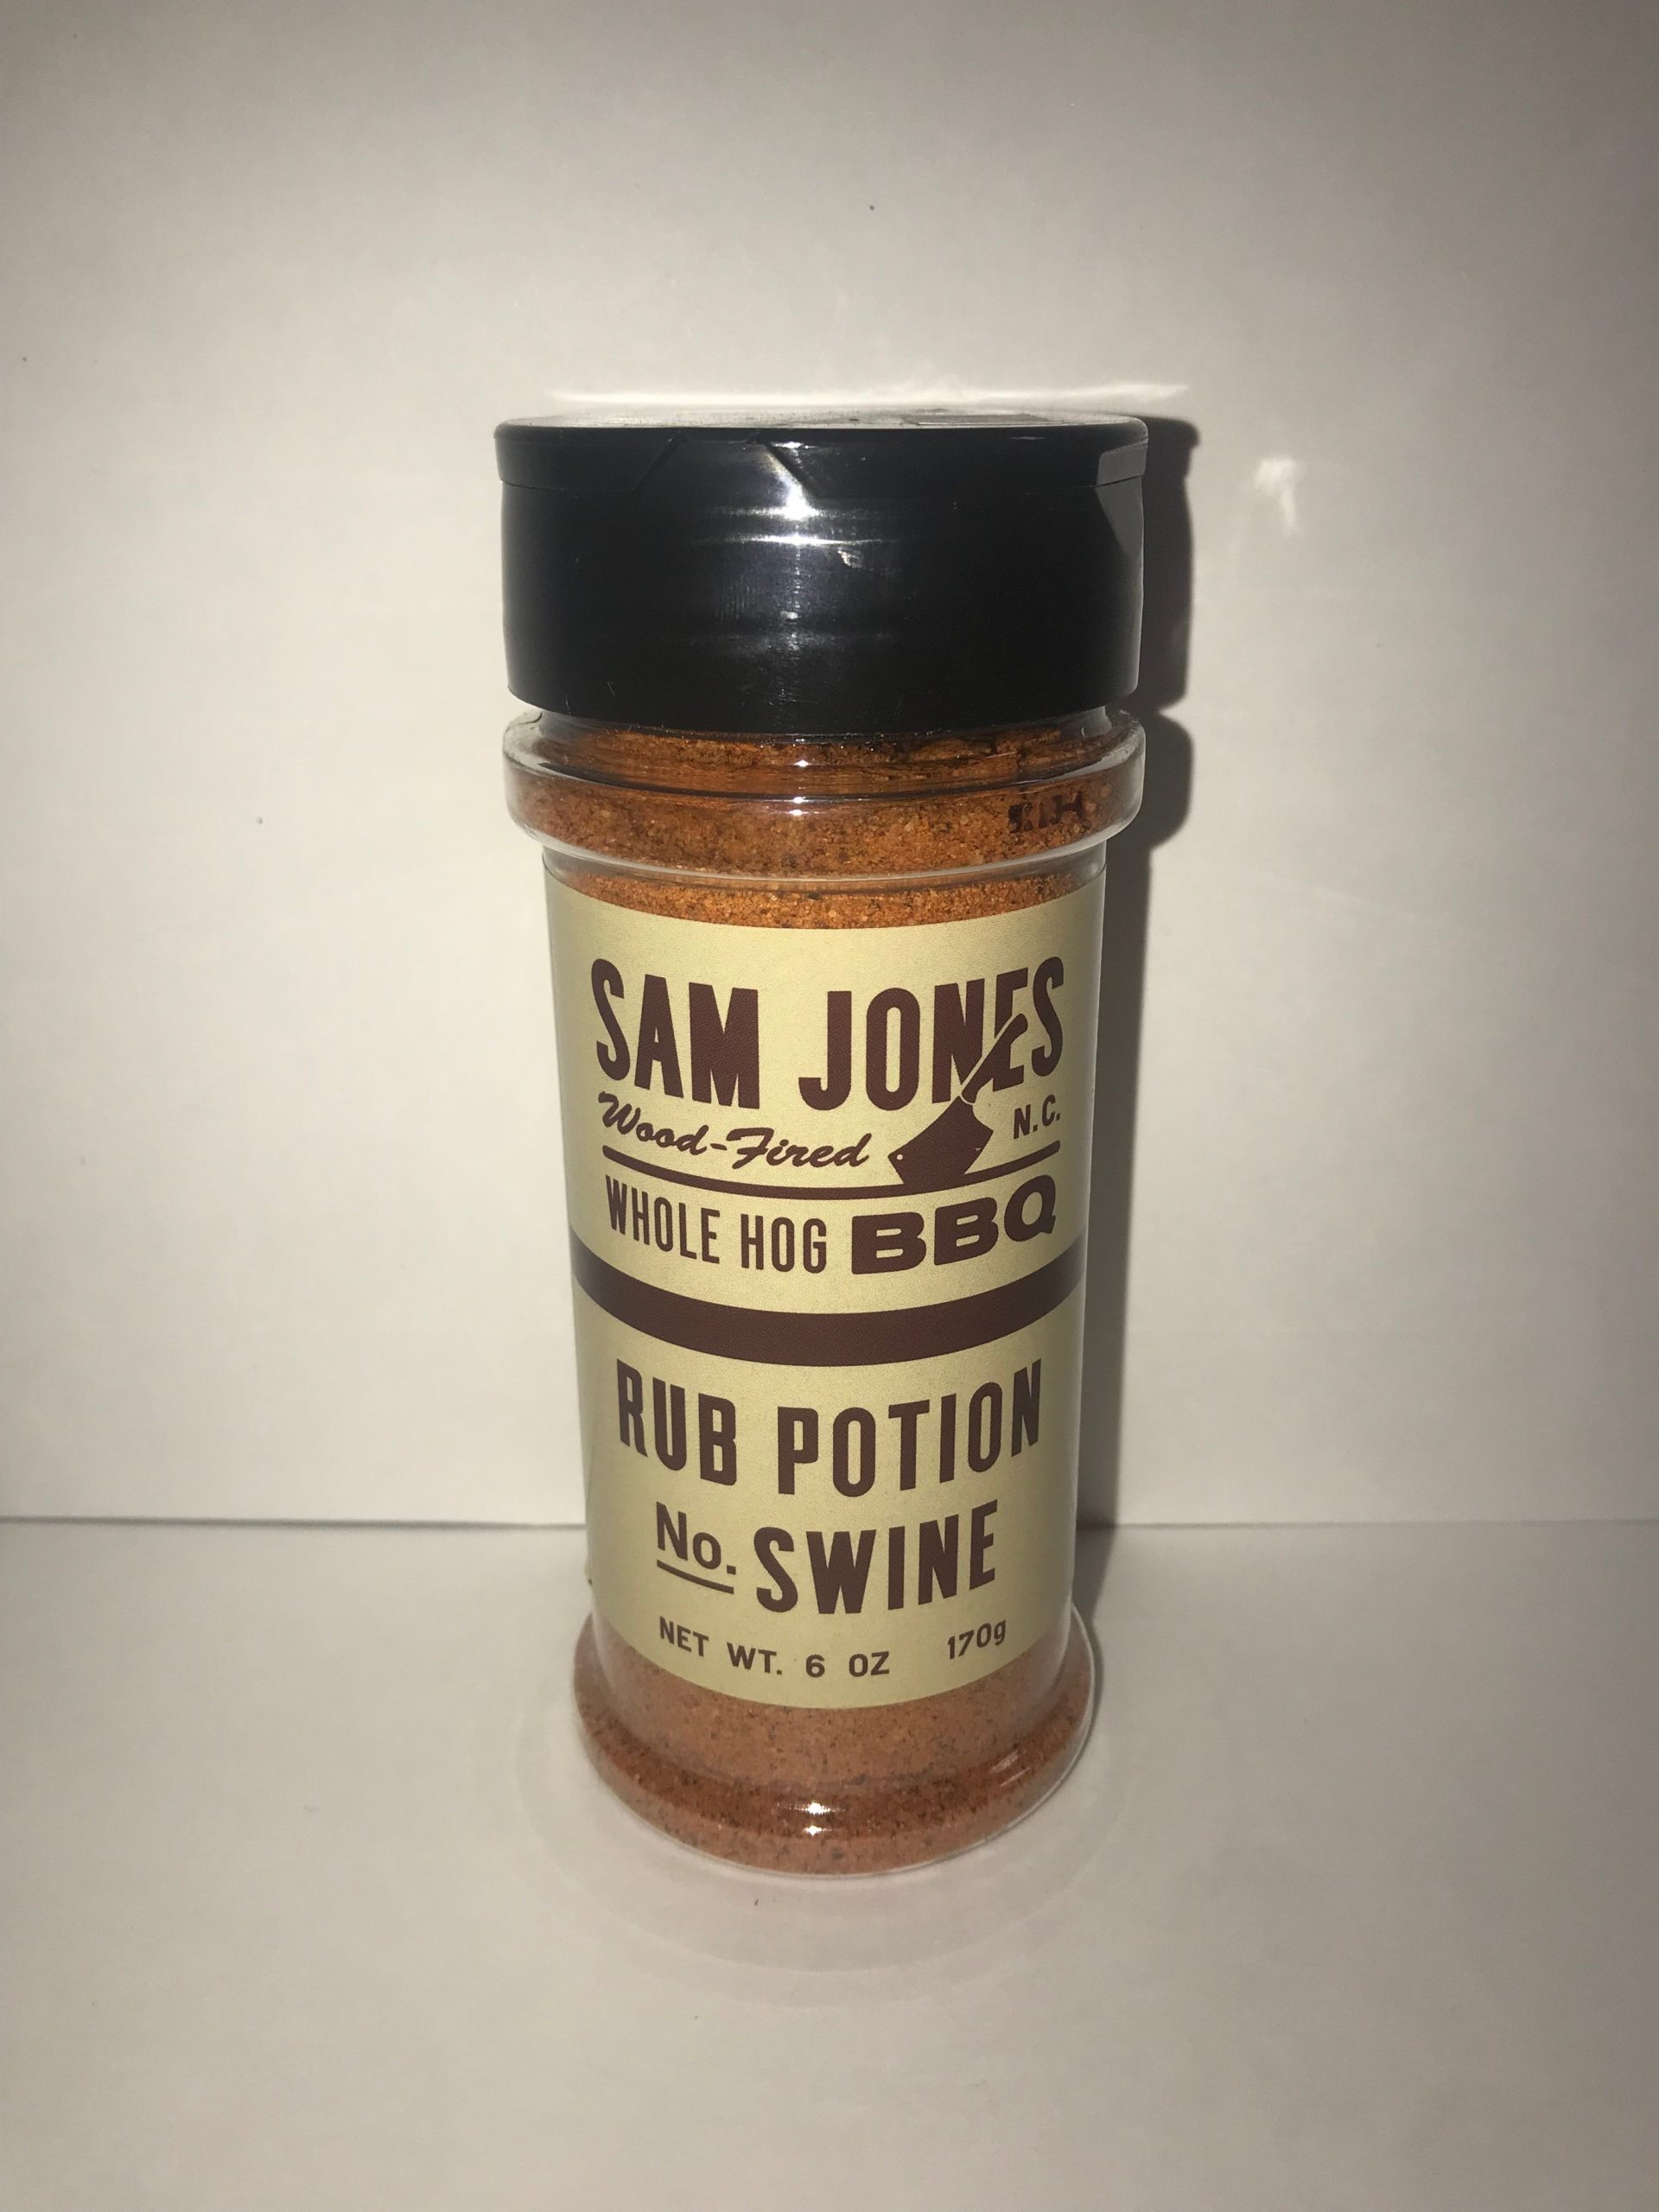 Sam Jones Rub Potion No. Swine